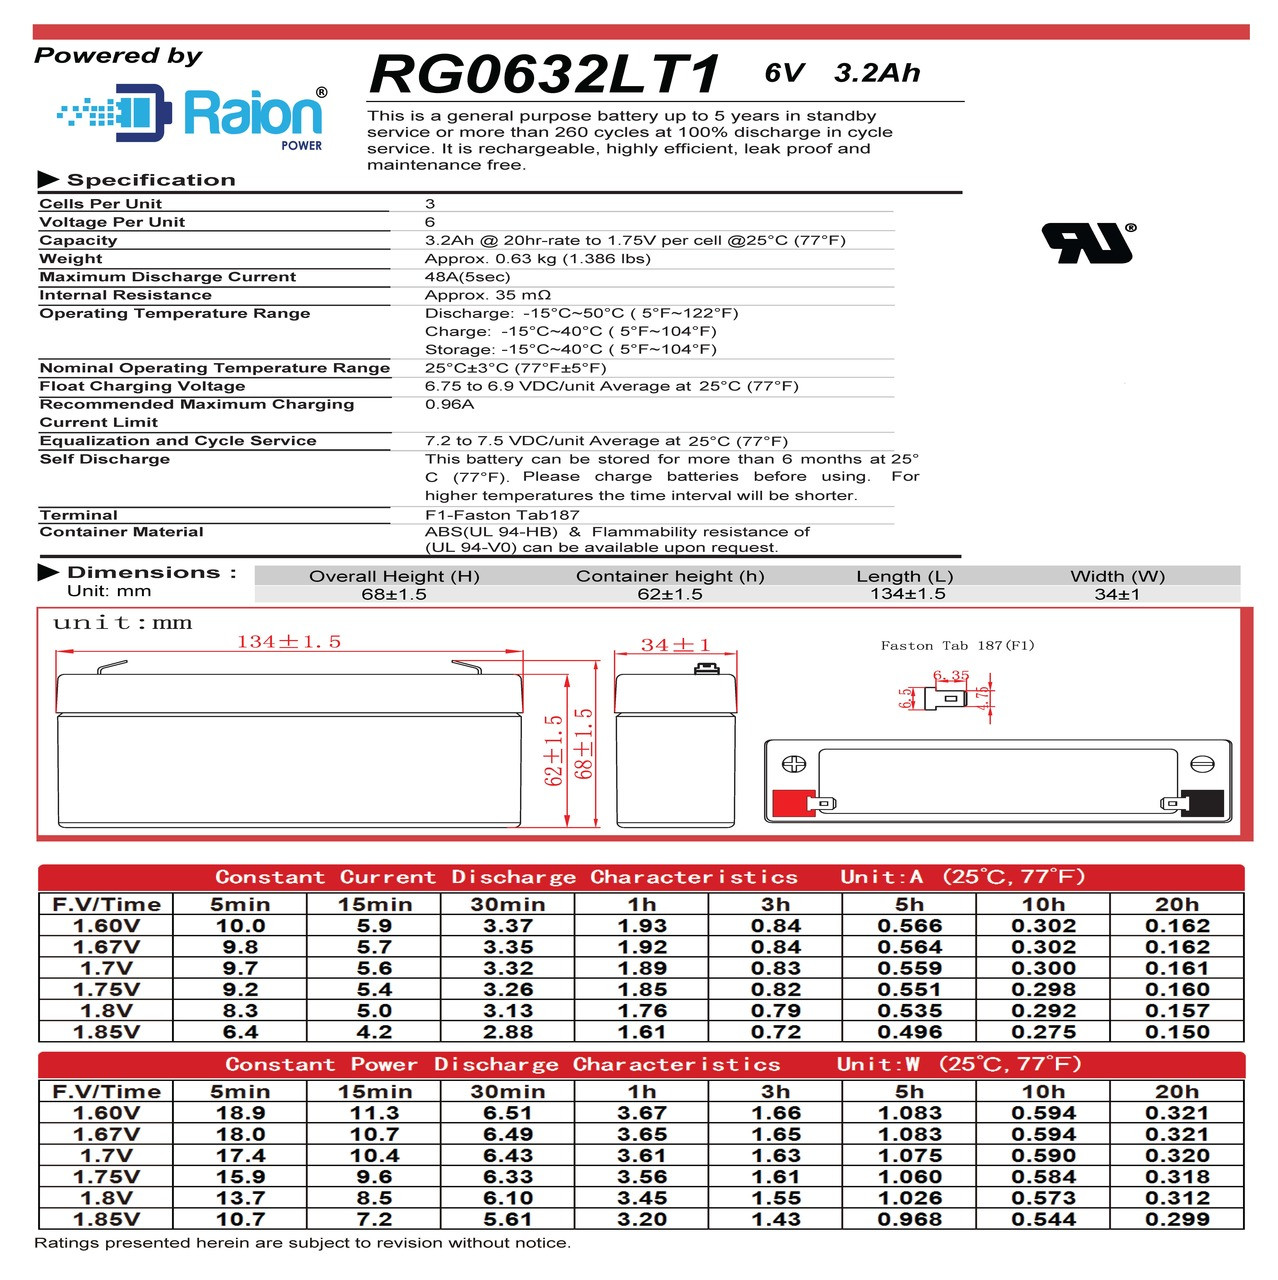 Raion Power RG0632LT1 6V 3.2Ah Battery Data Sheet for NEATA NT6-3.2